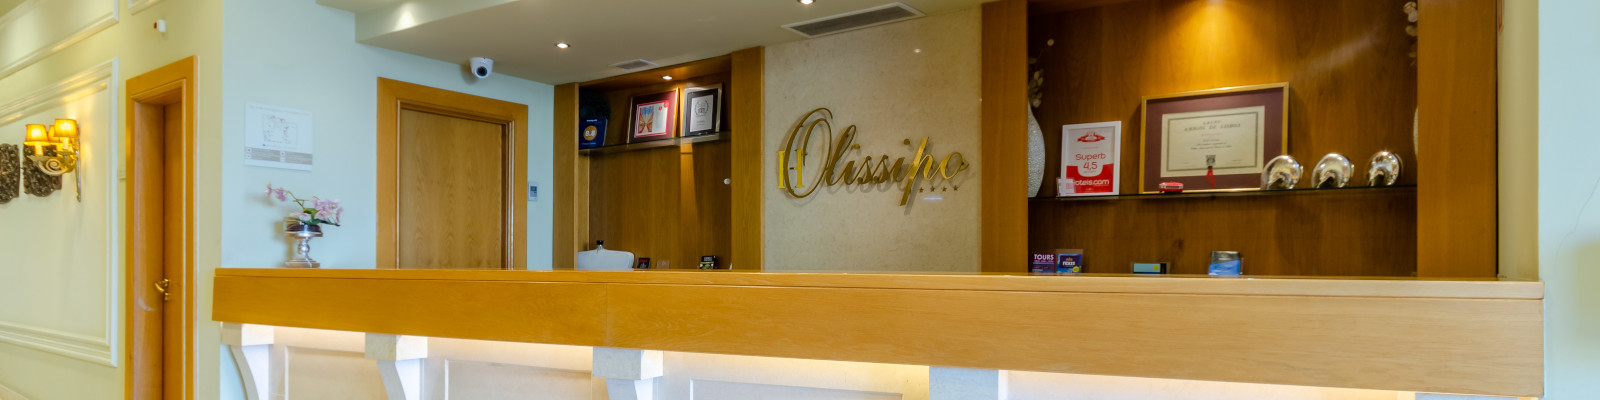 Grupo Olissippo Hotels